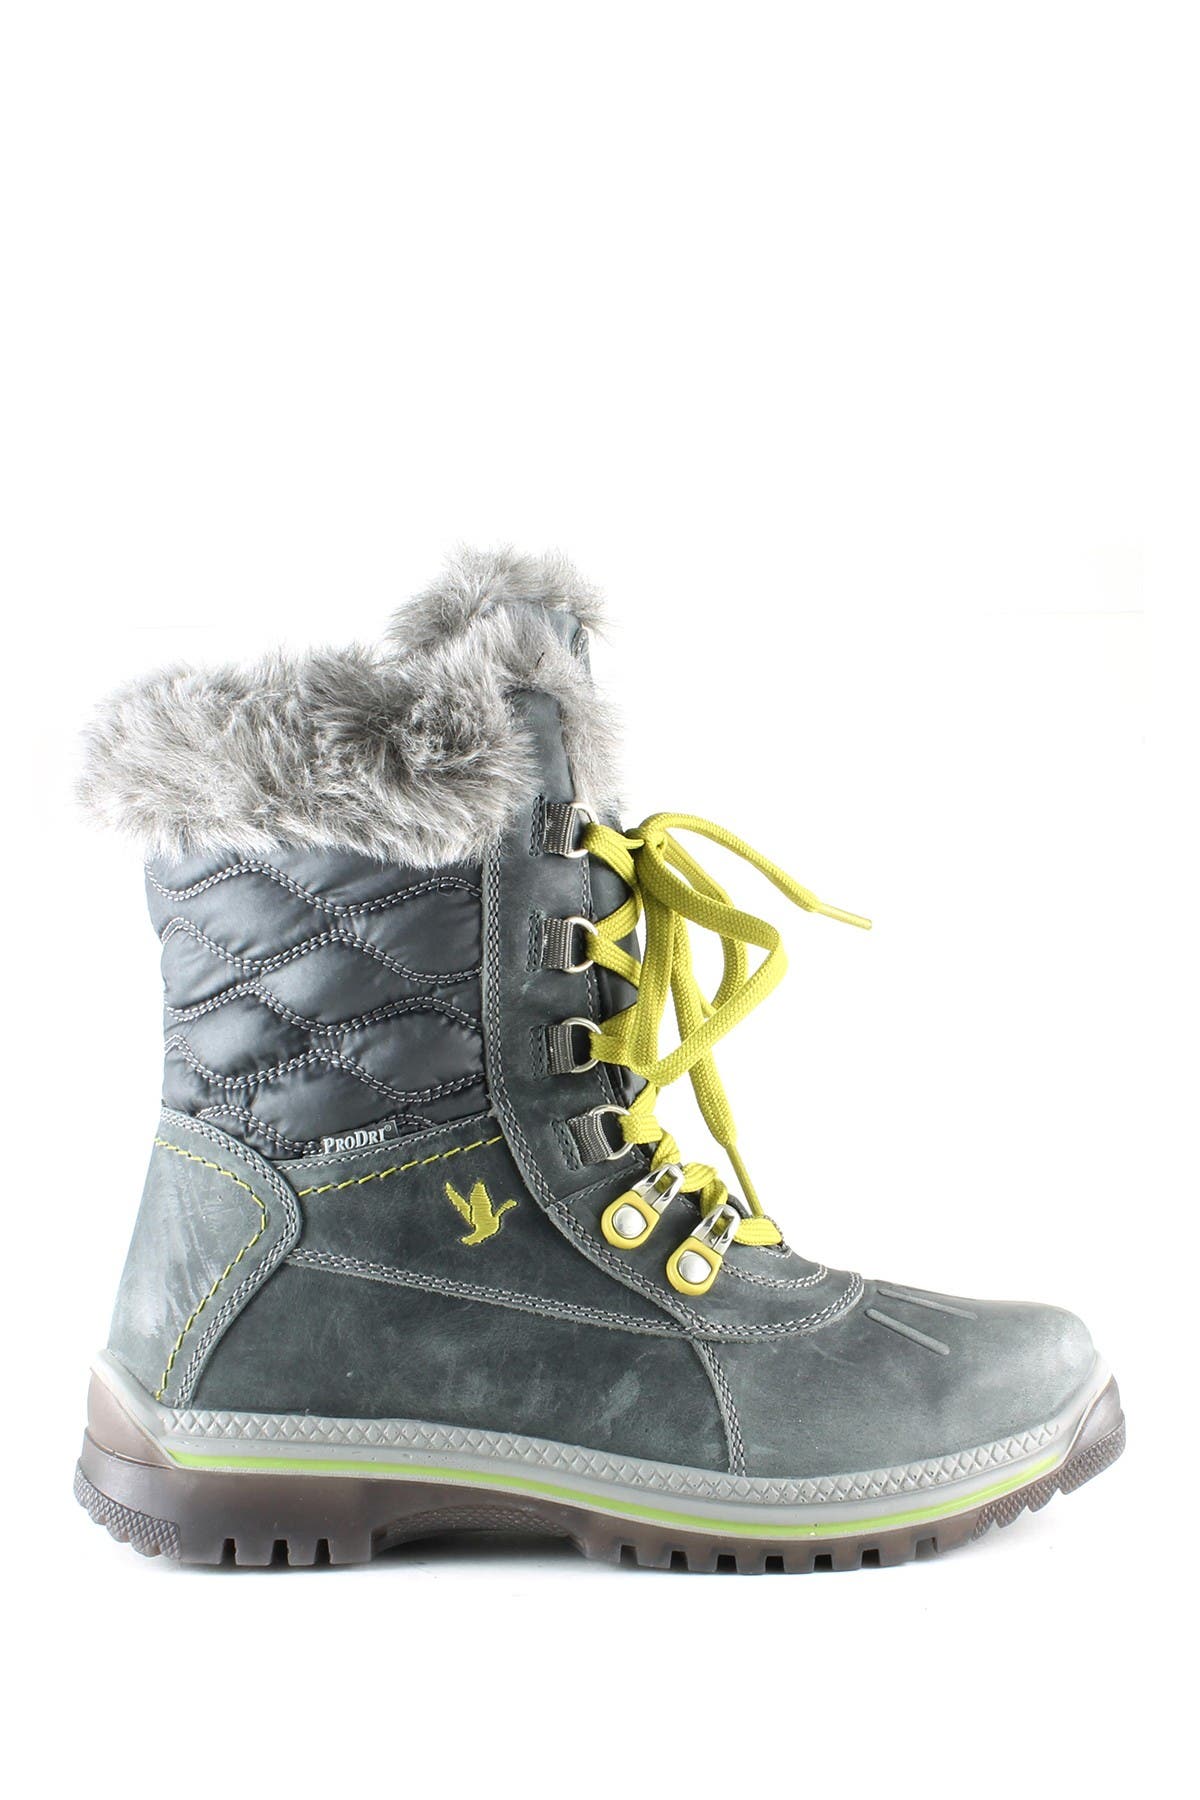 santana canada maldine 2 snow boot